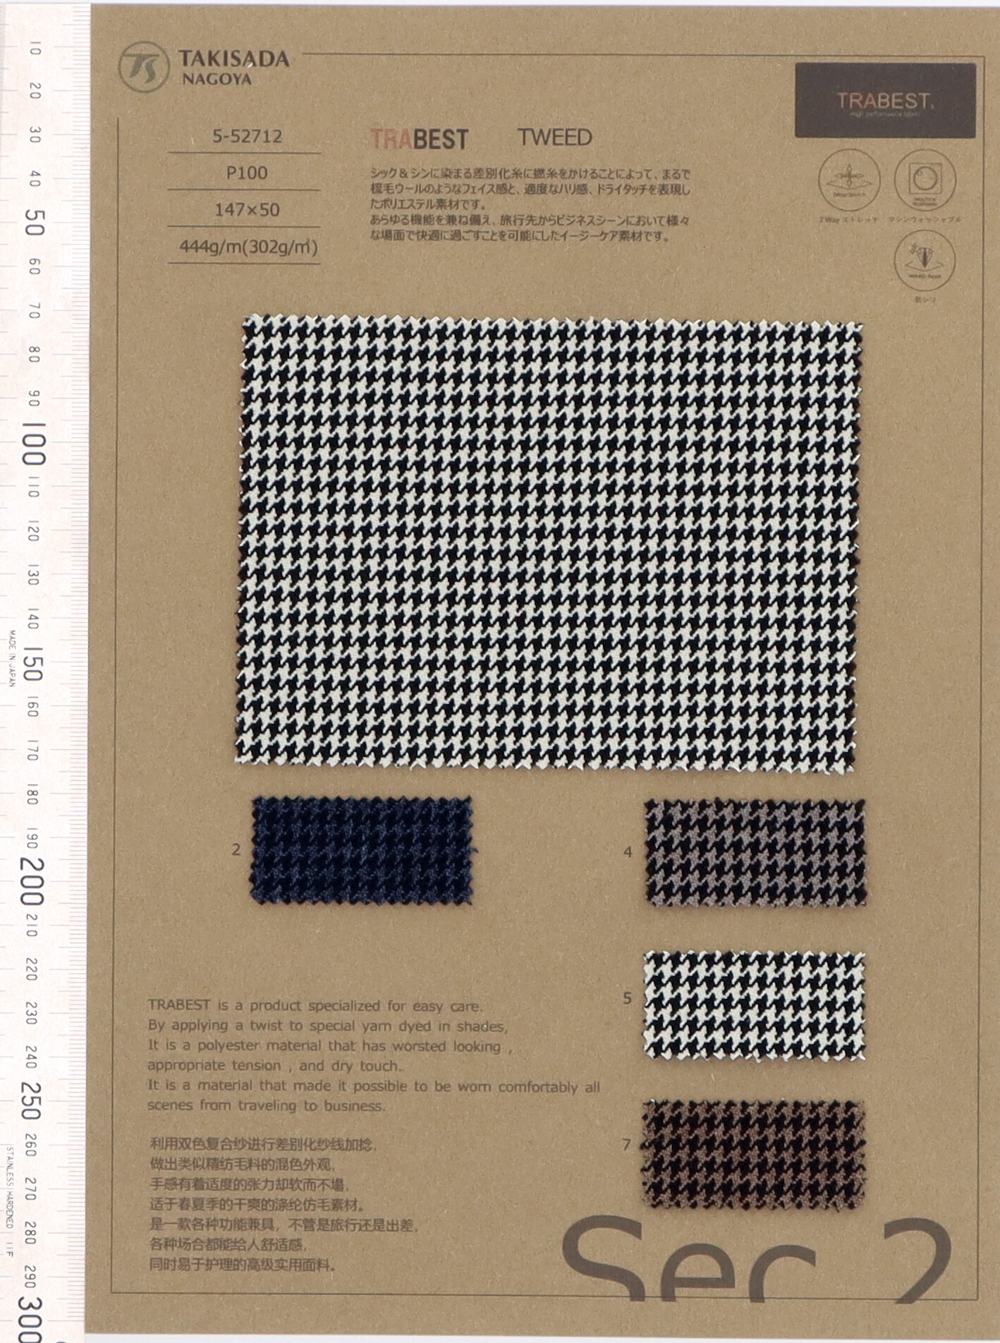 5-52712 TRABEST TWEED Soft Touch Melange Pata De Gallo[Fabrica Textil] Takisada Nagoya